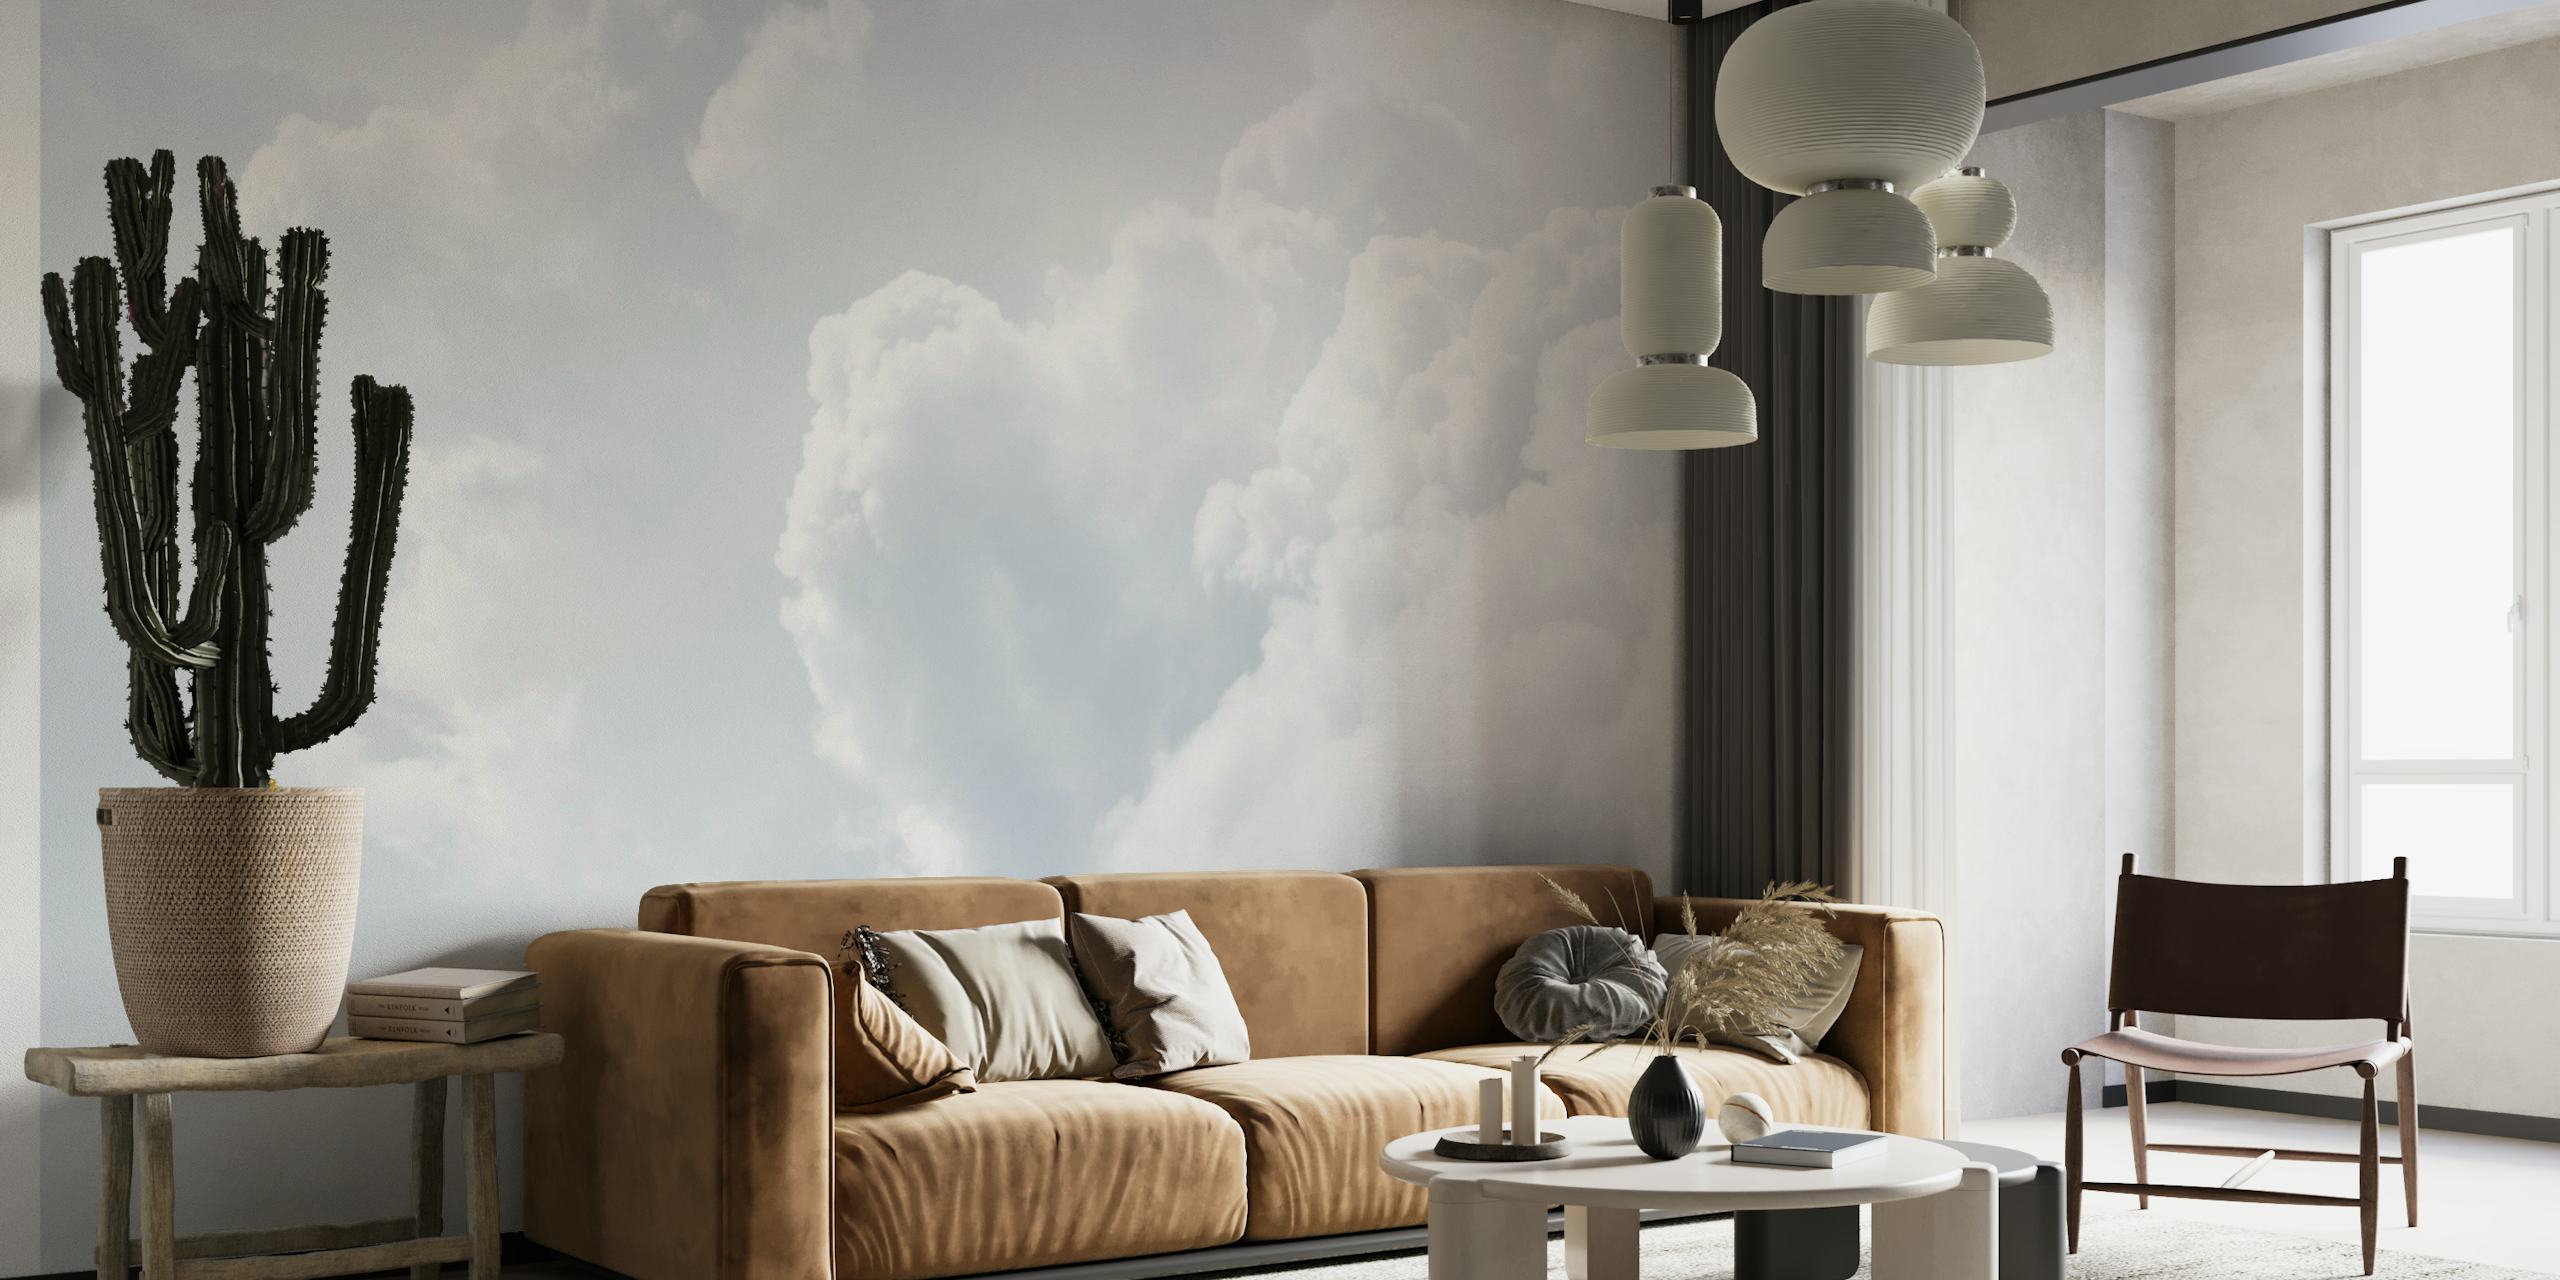 Blide hvide skyer mod en blød grå himmel vægmaleri